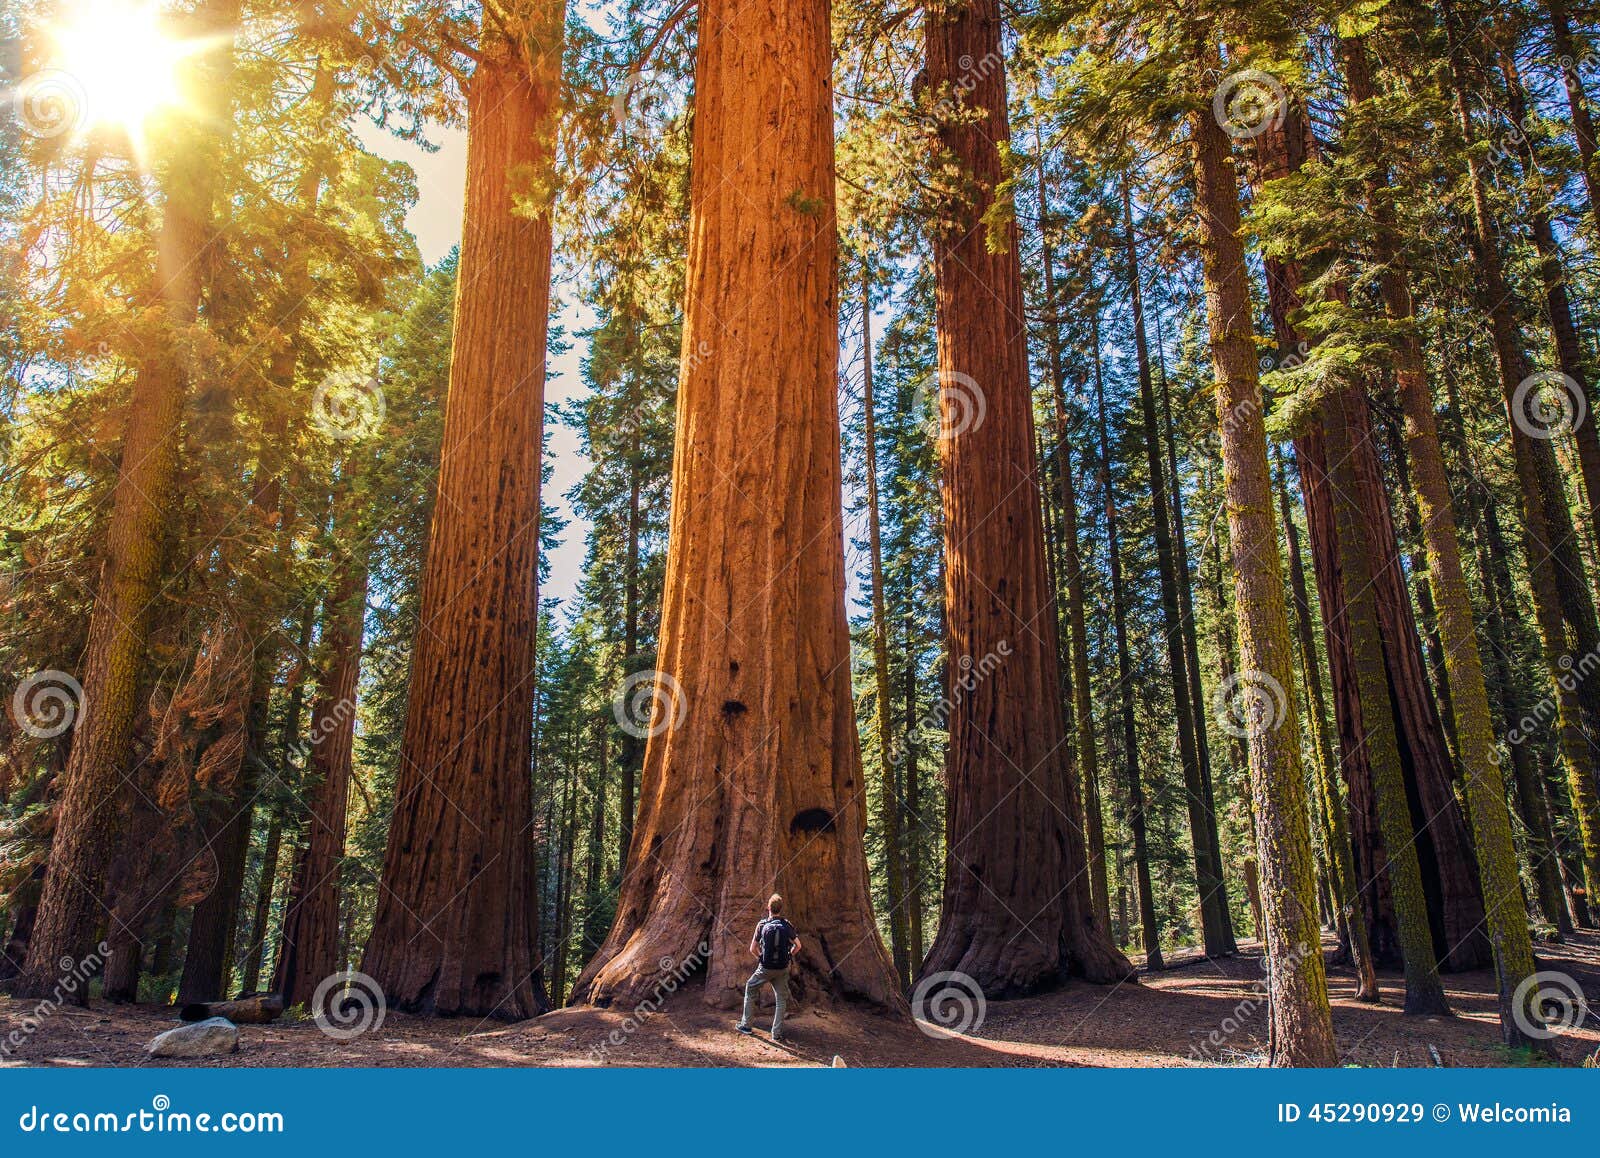 sequoia vs man